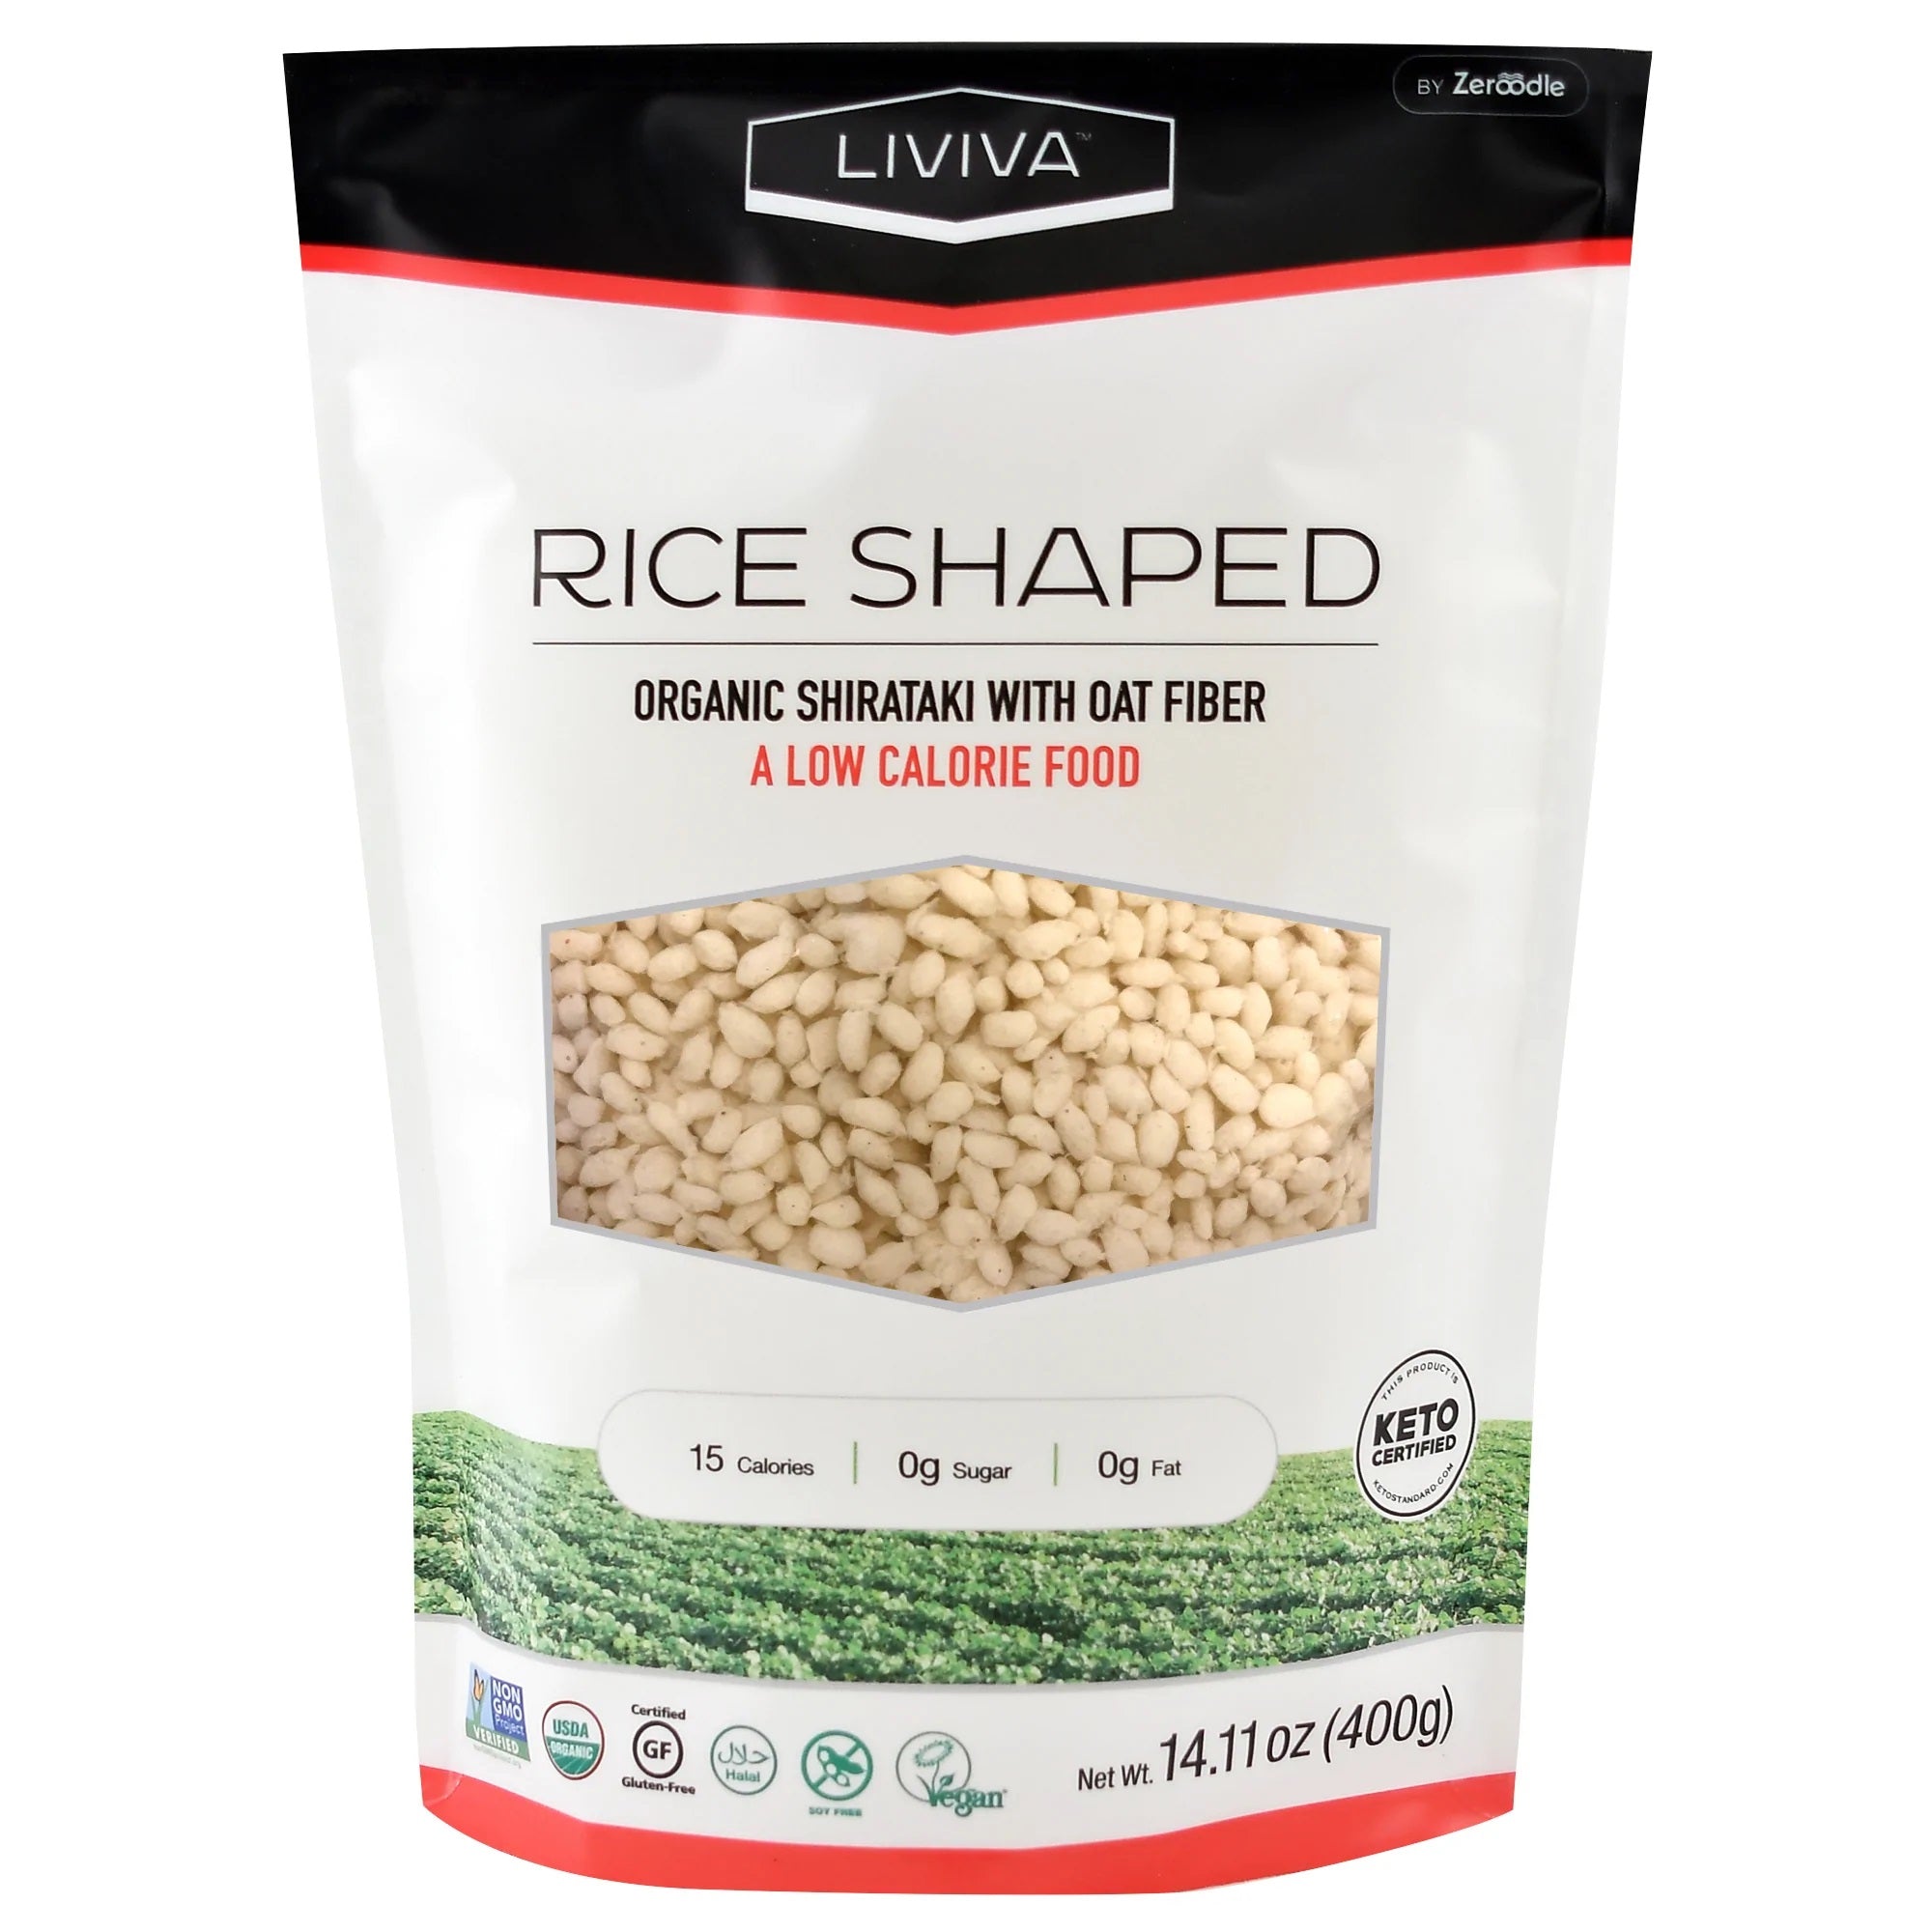 Liviva Organic Premium Shirataki - Rice with Oat Fiber - High-quality Pasta by Liviva at 